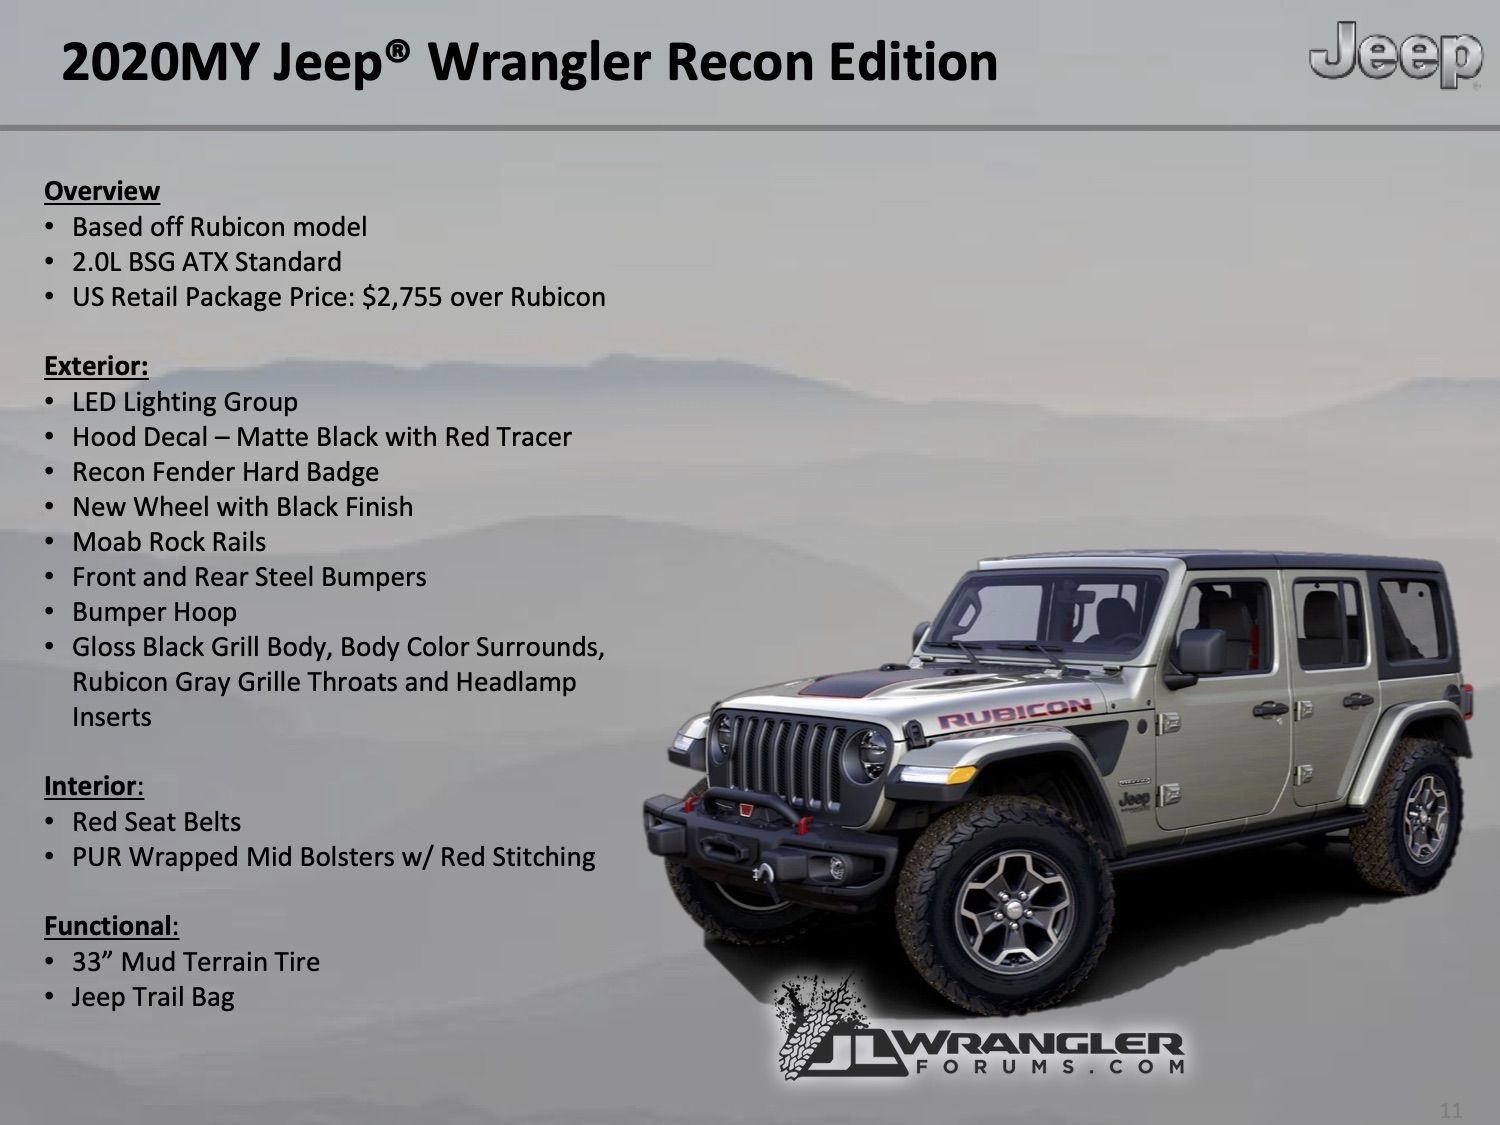 Arriba 97+ imagen jeep wrangler recon edition